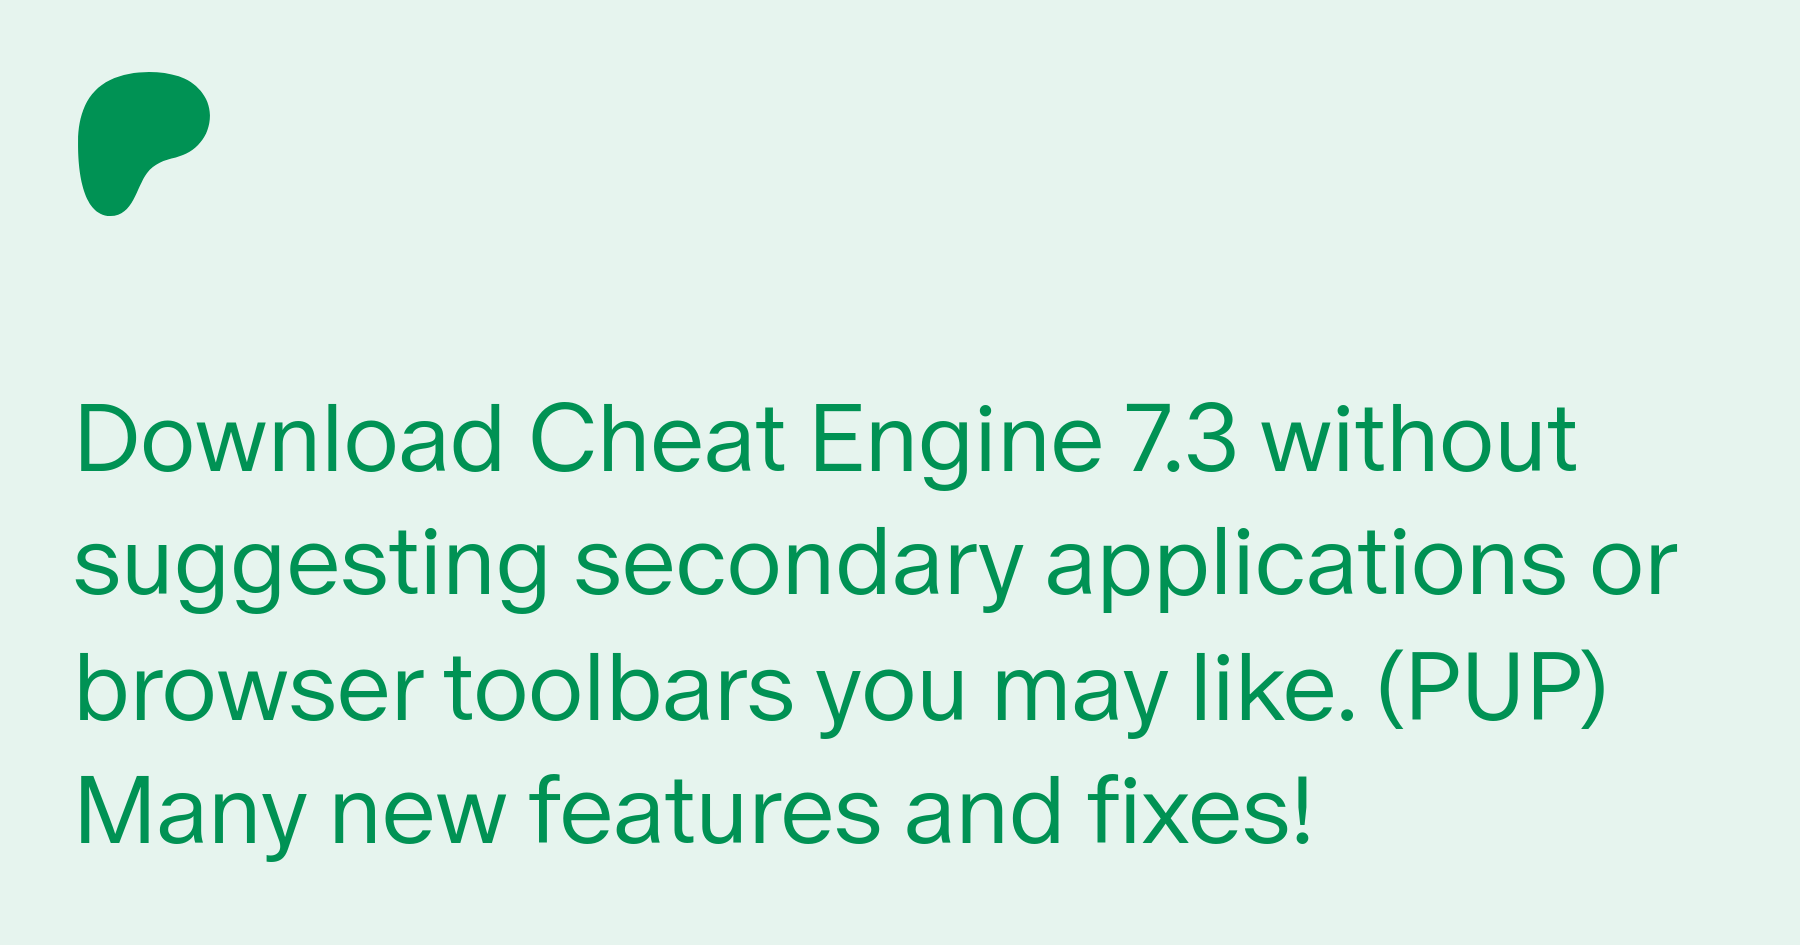 Cheat engine 7.3 download